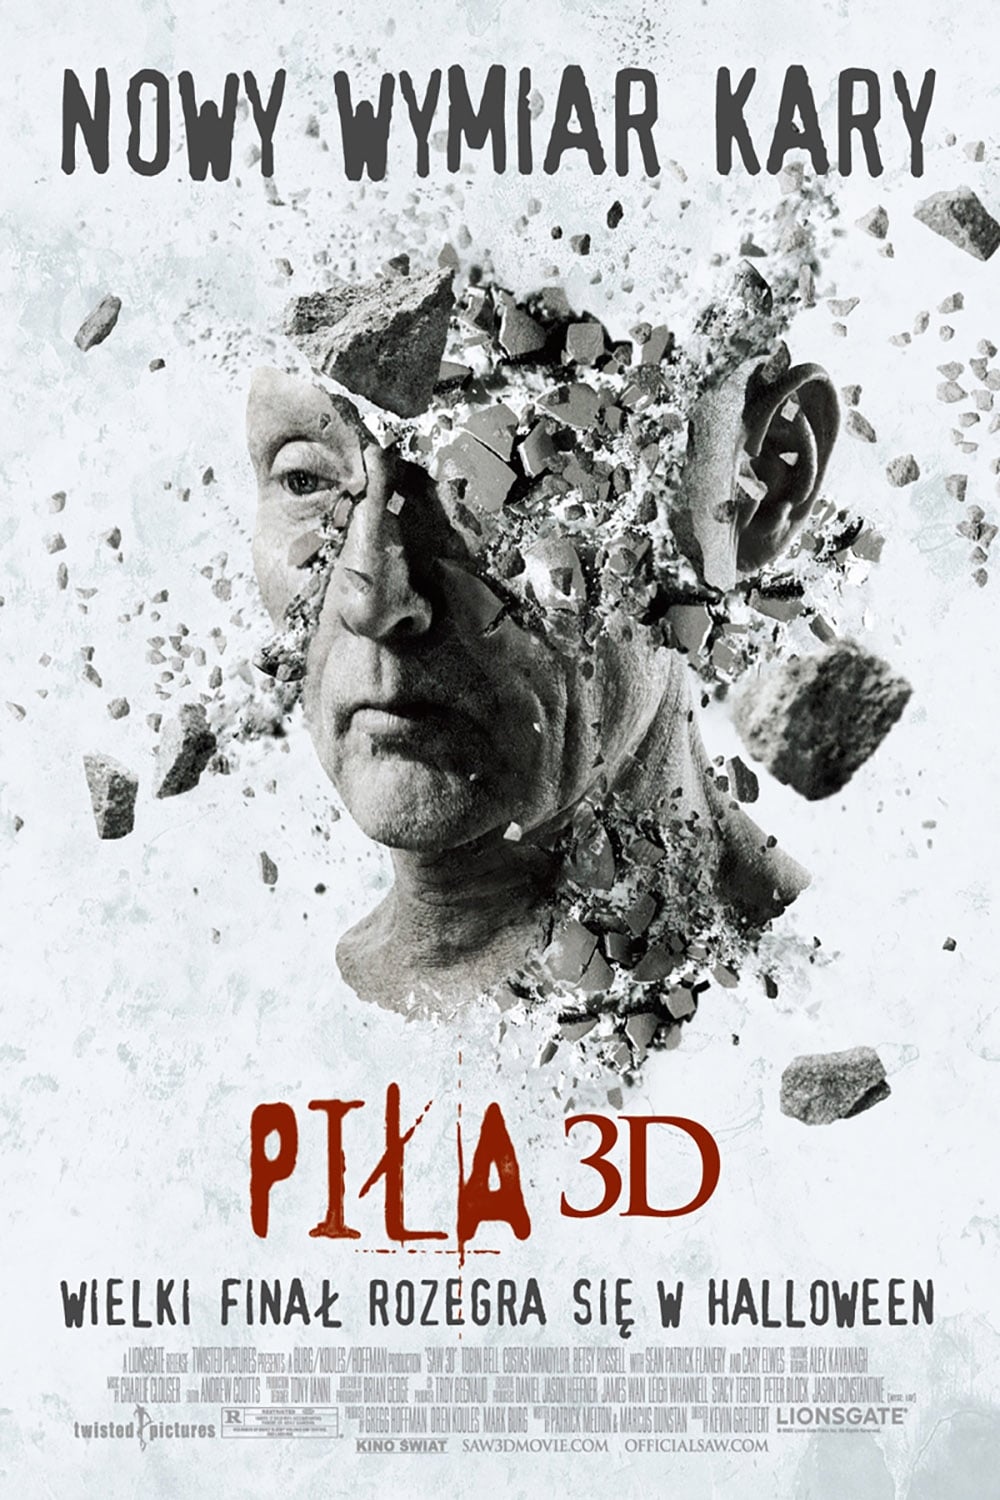 Piła 3D (2010)